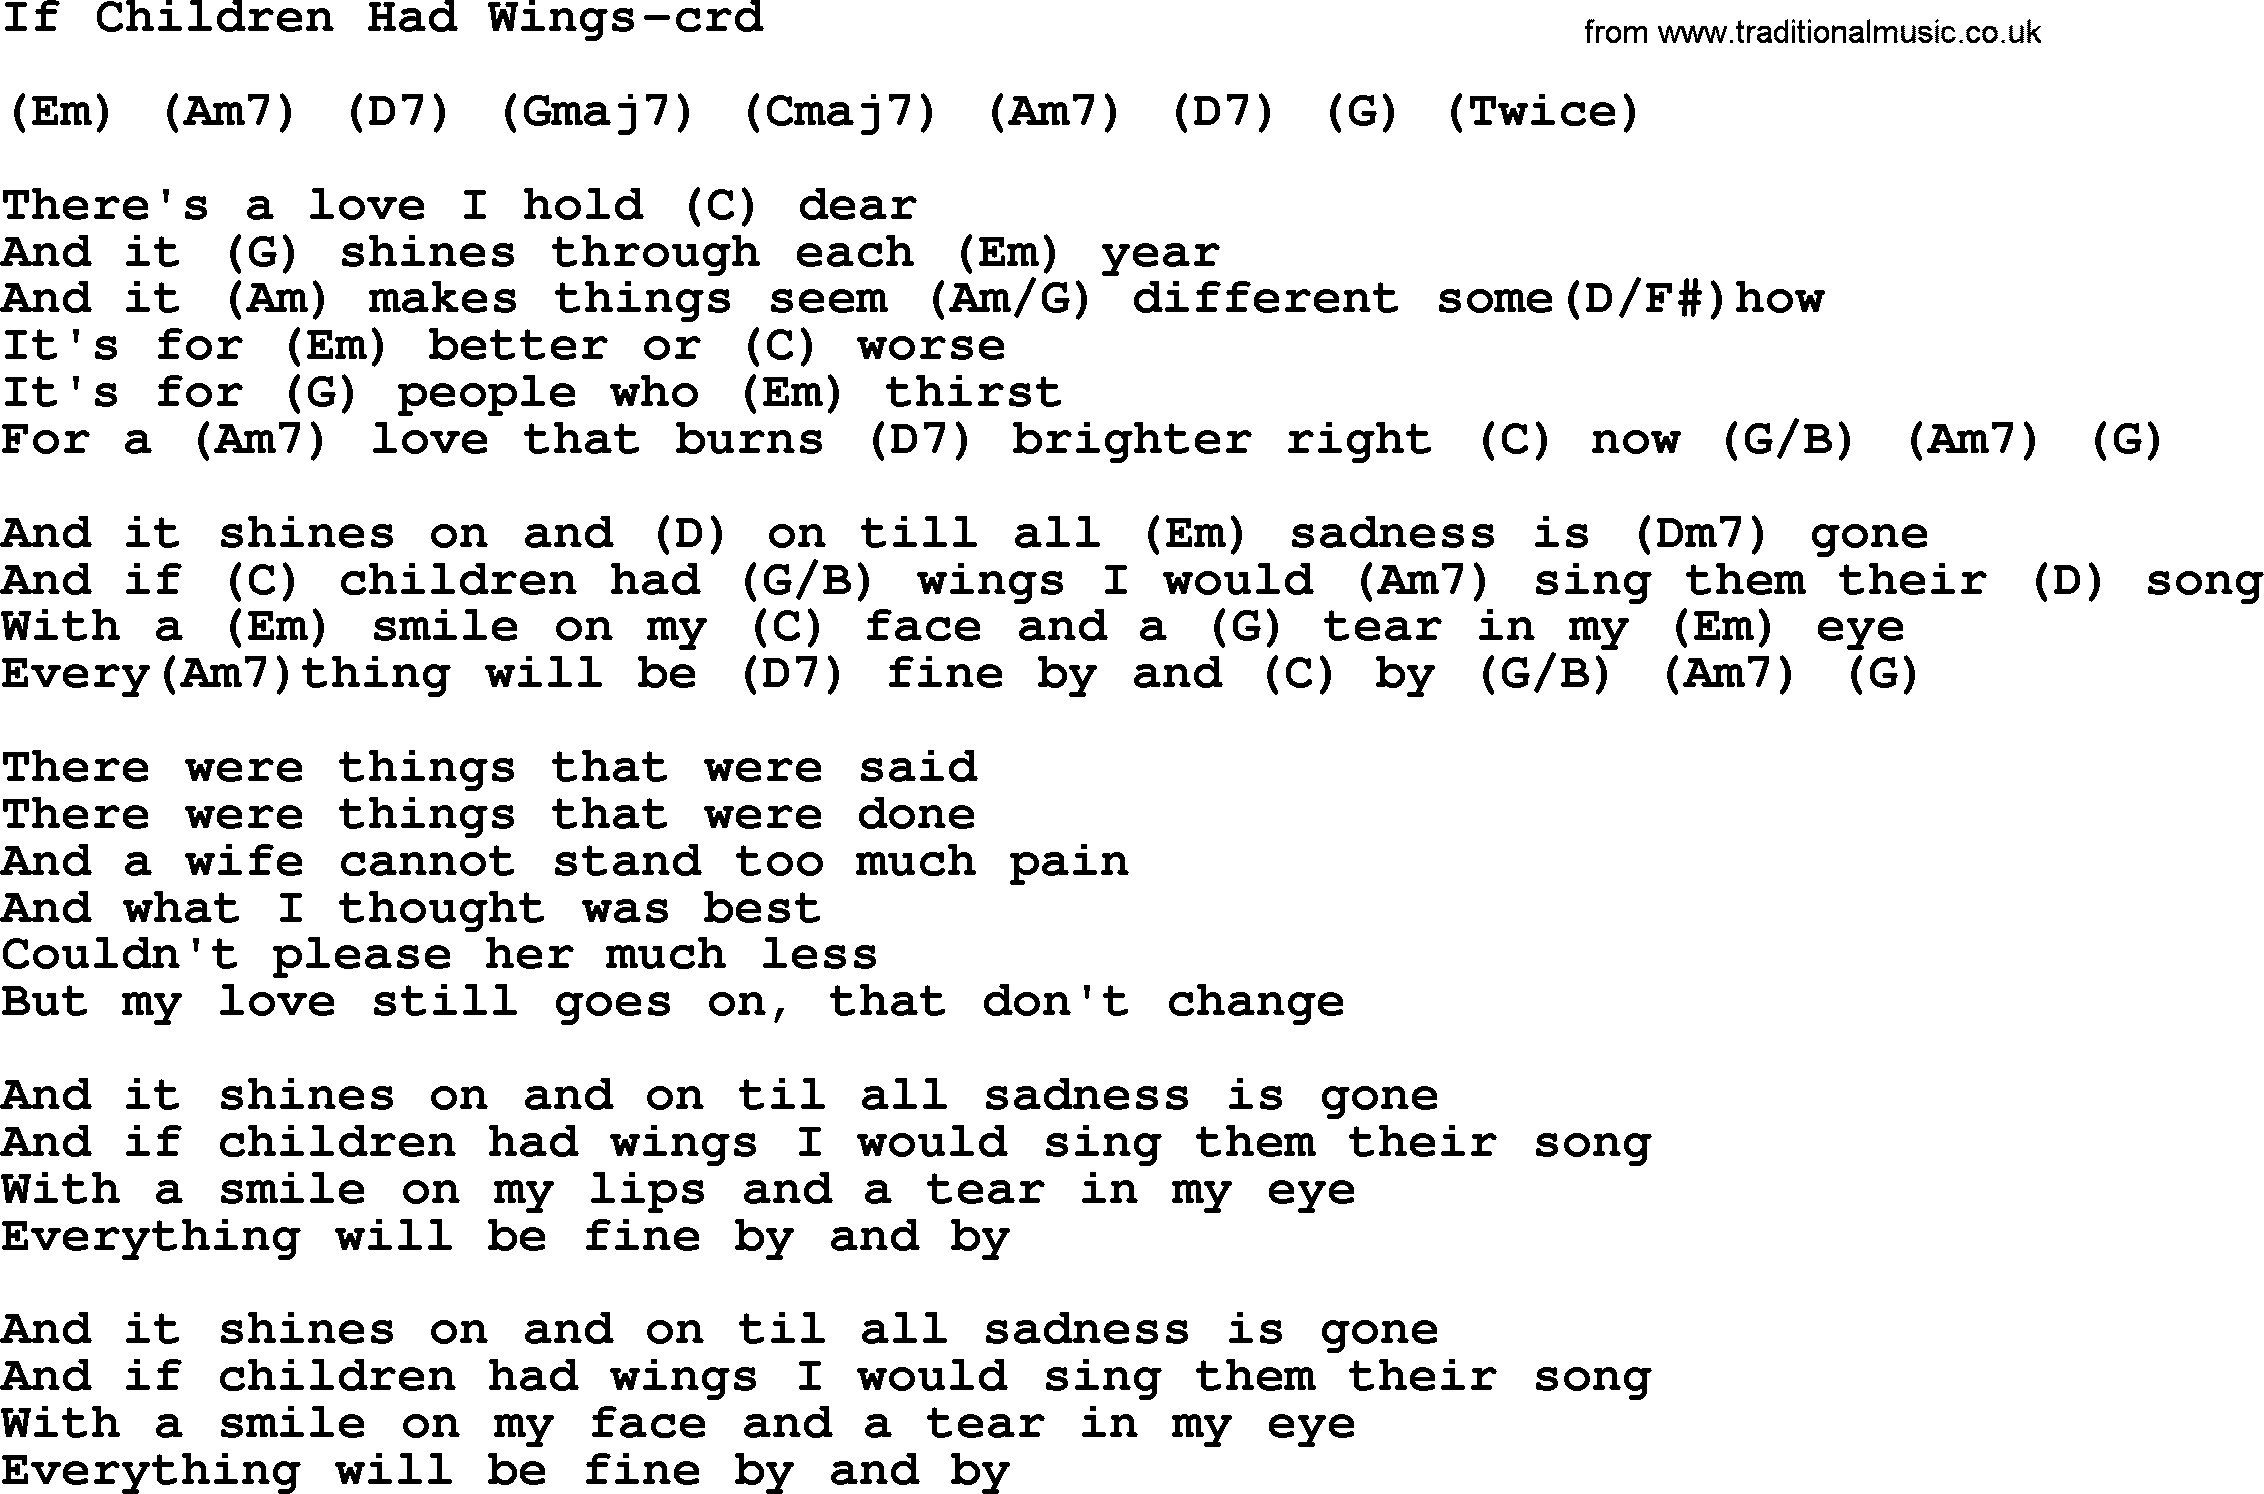 Gordon Lightfoot song If Children Had Wings, lyrics and chords